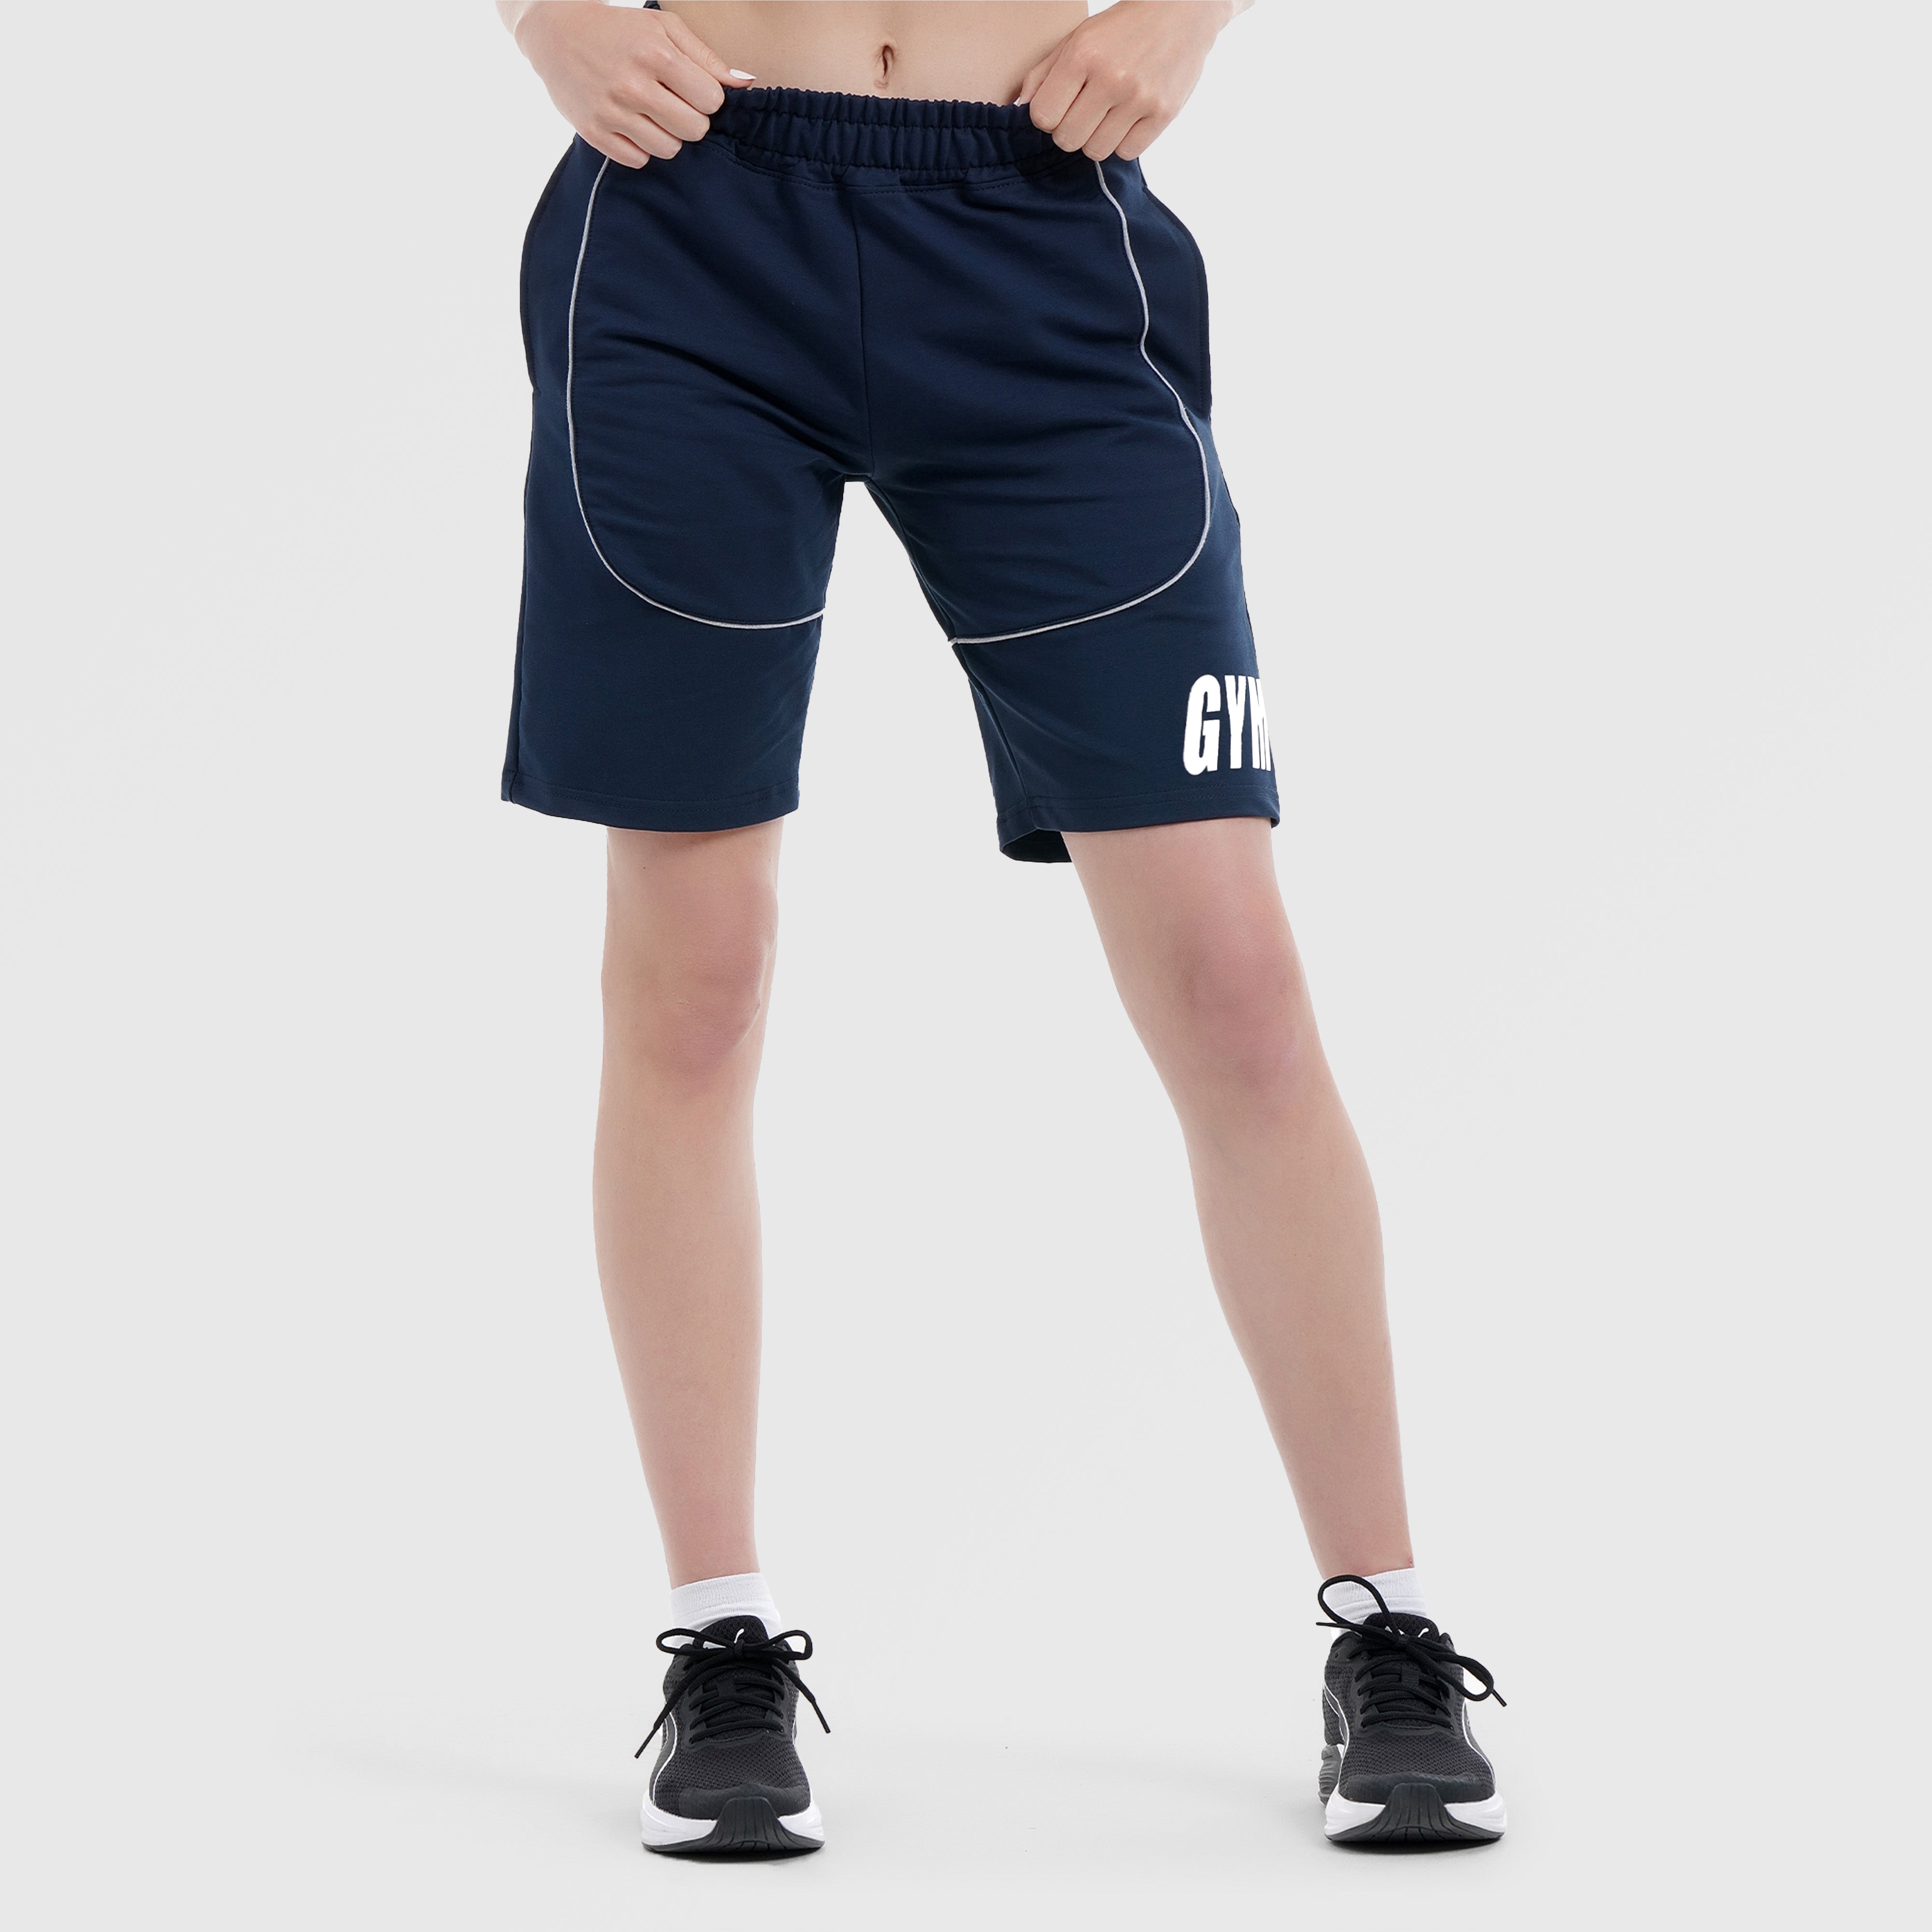 PipePro Shorts (Navy)